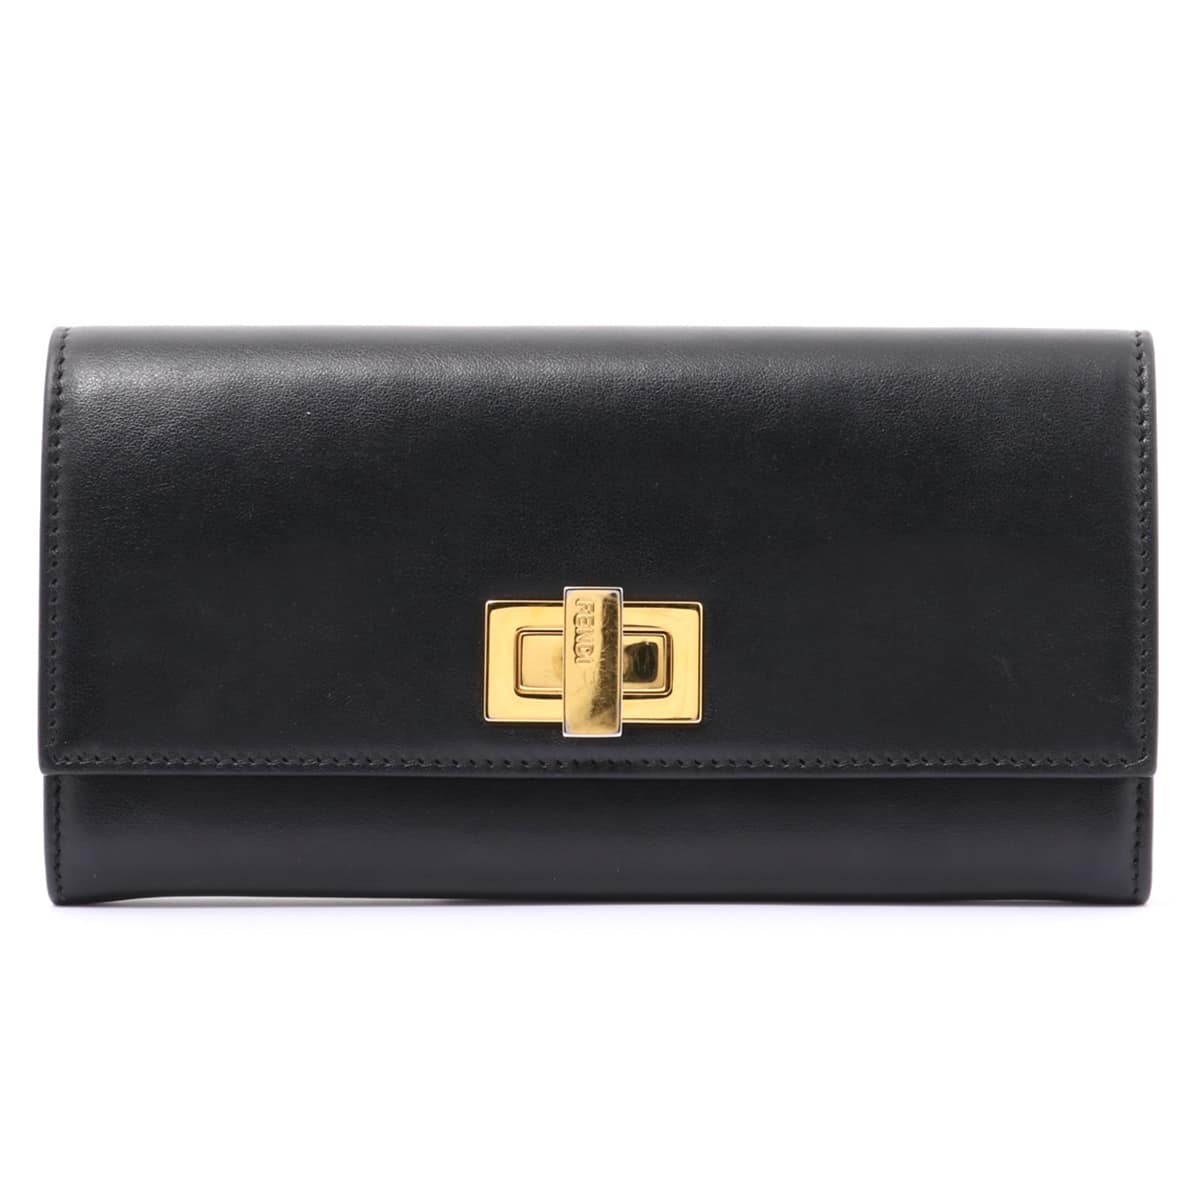 Fendi Leather Wallet Black